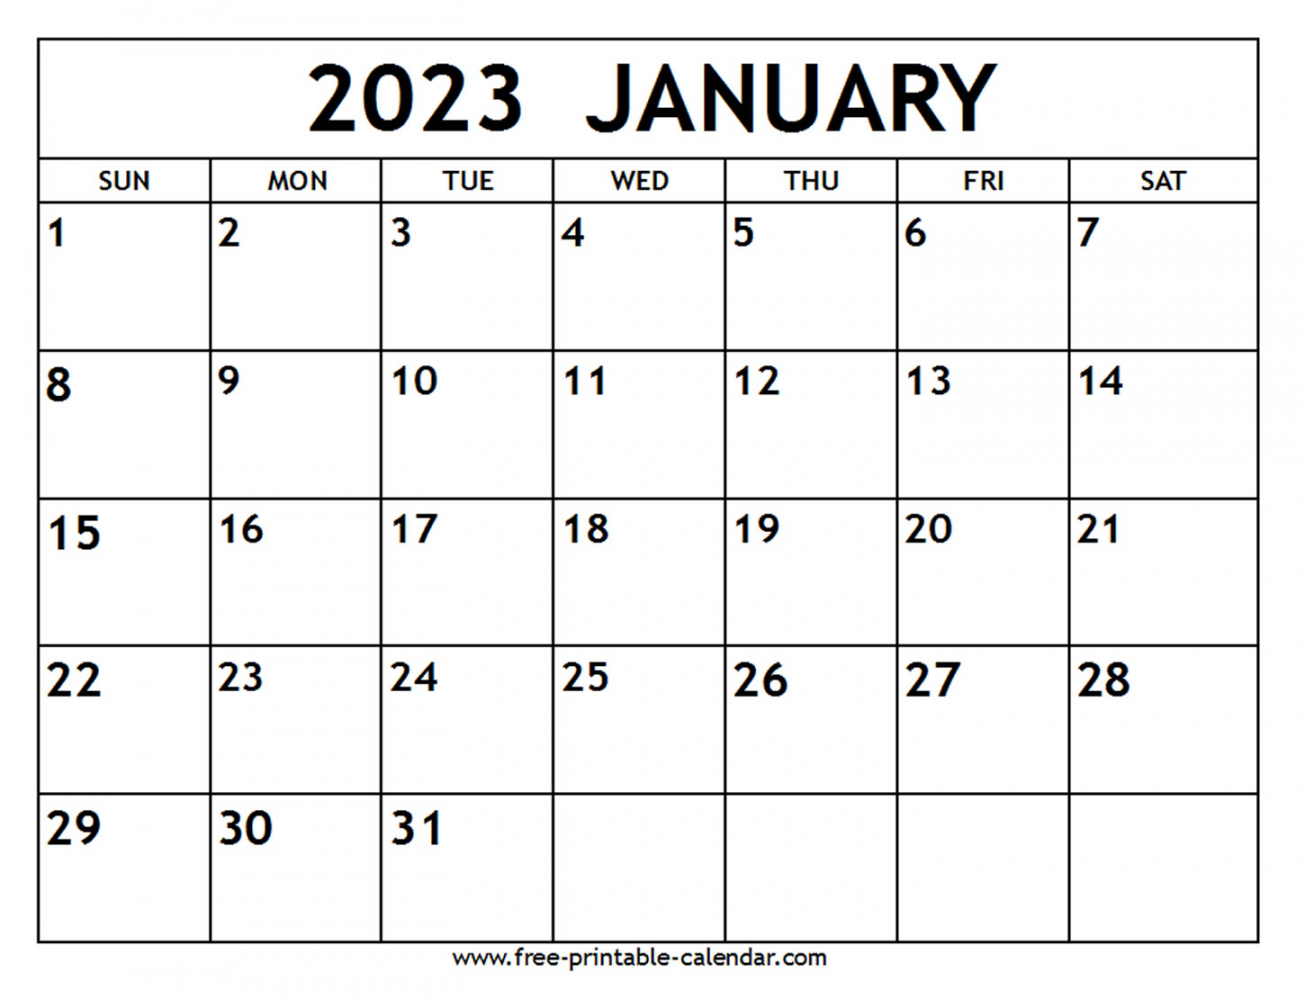 January  Calendar - Free-printable-calendar - January 2023 Calendar Printable Free